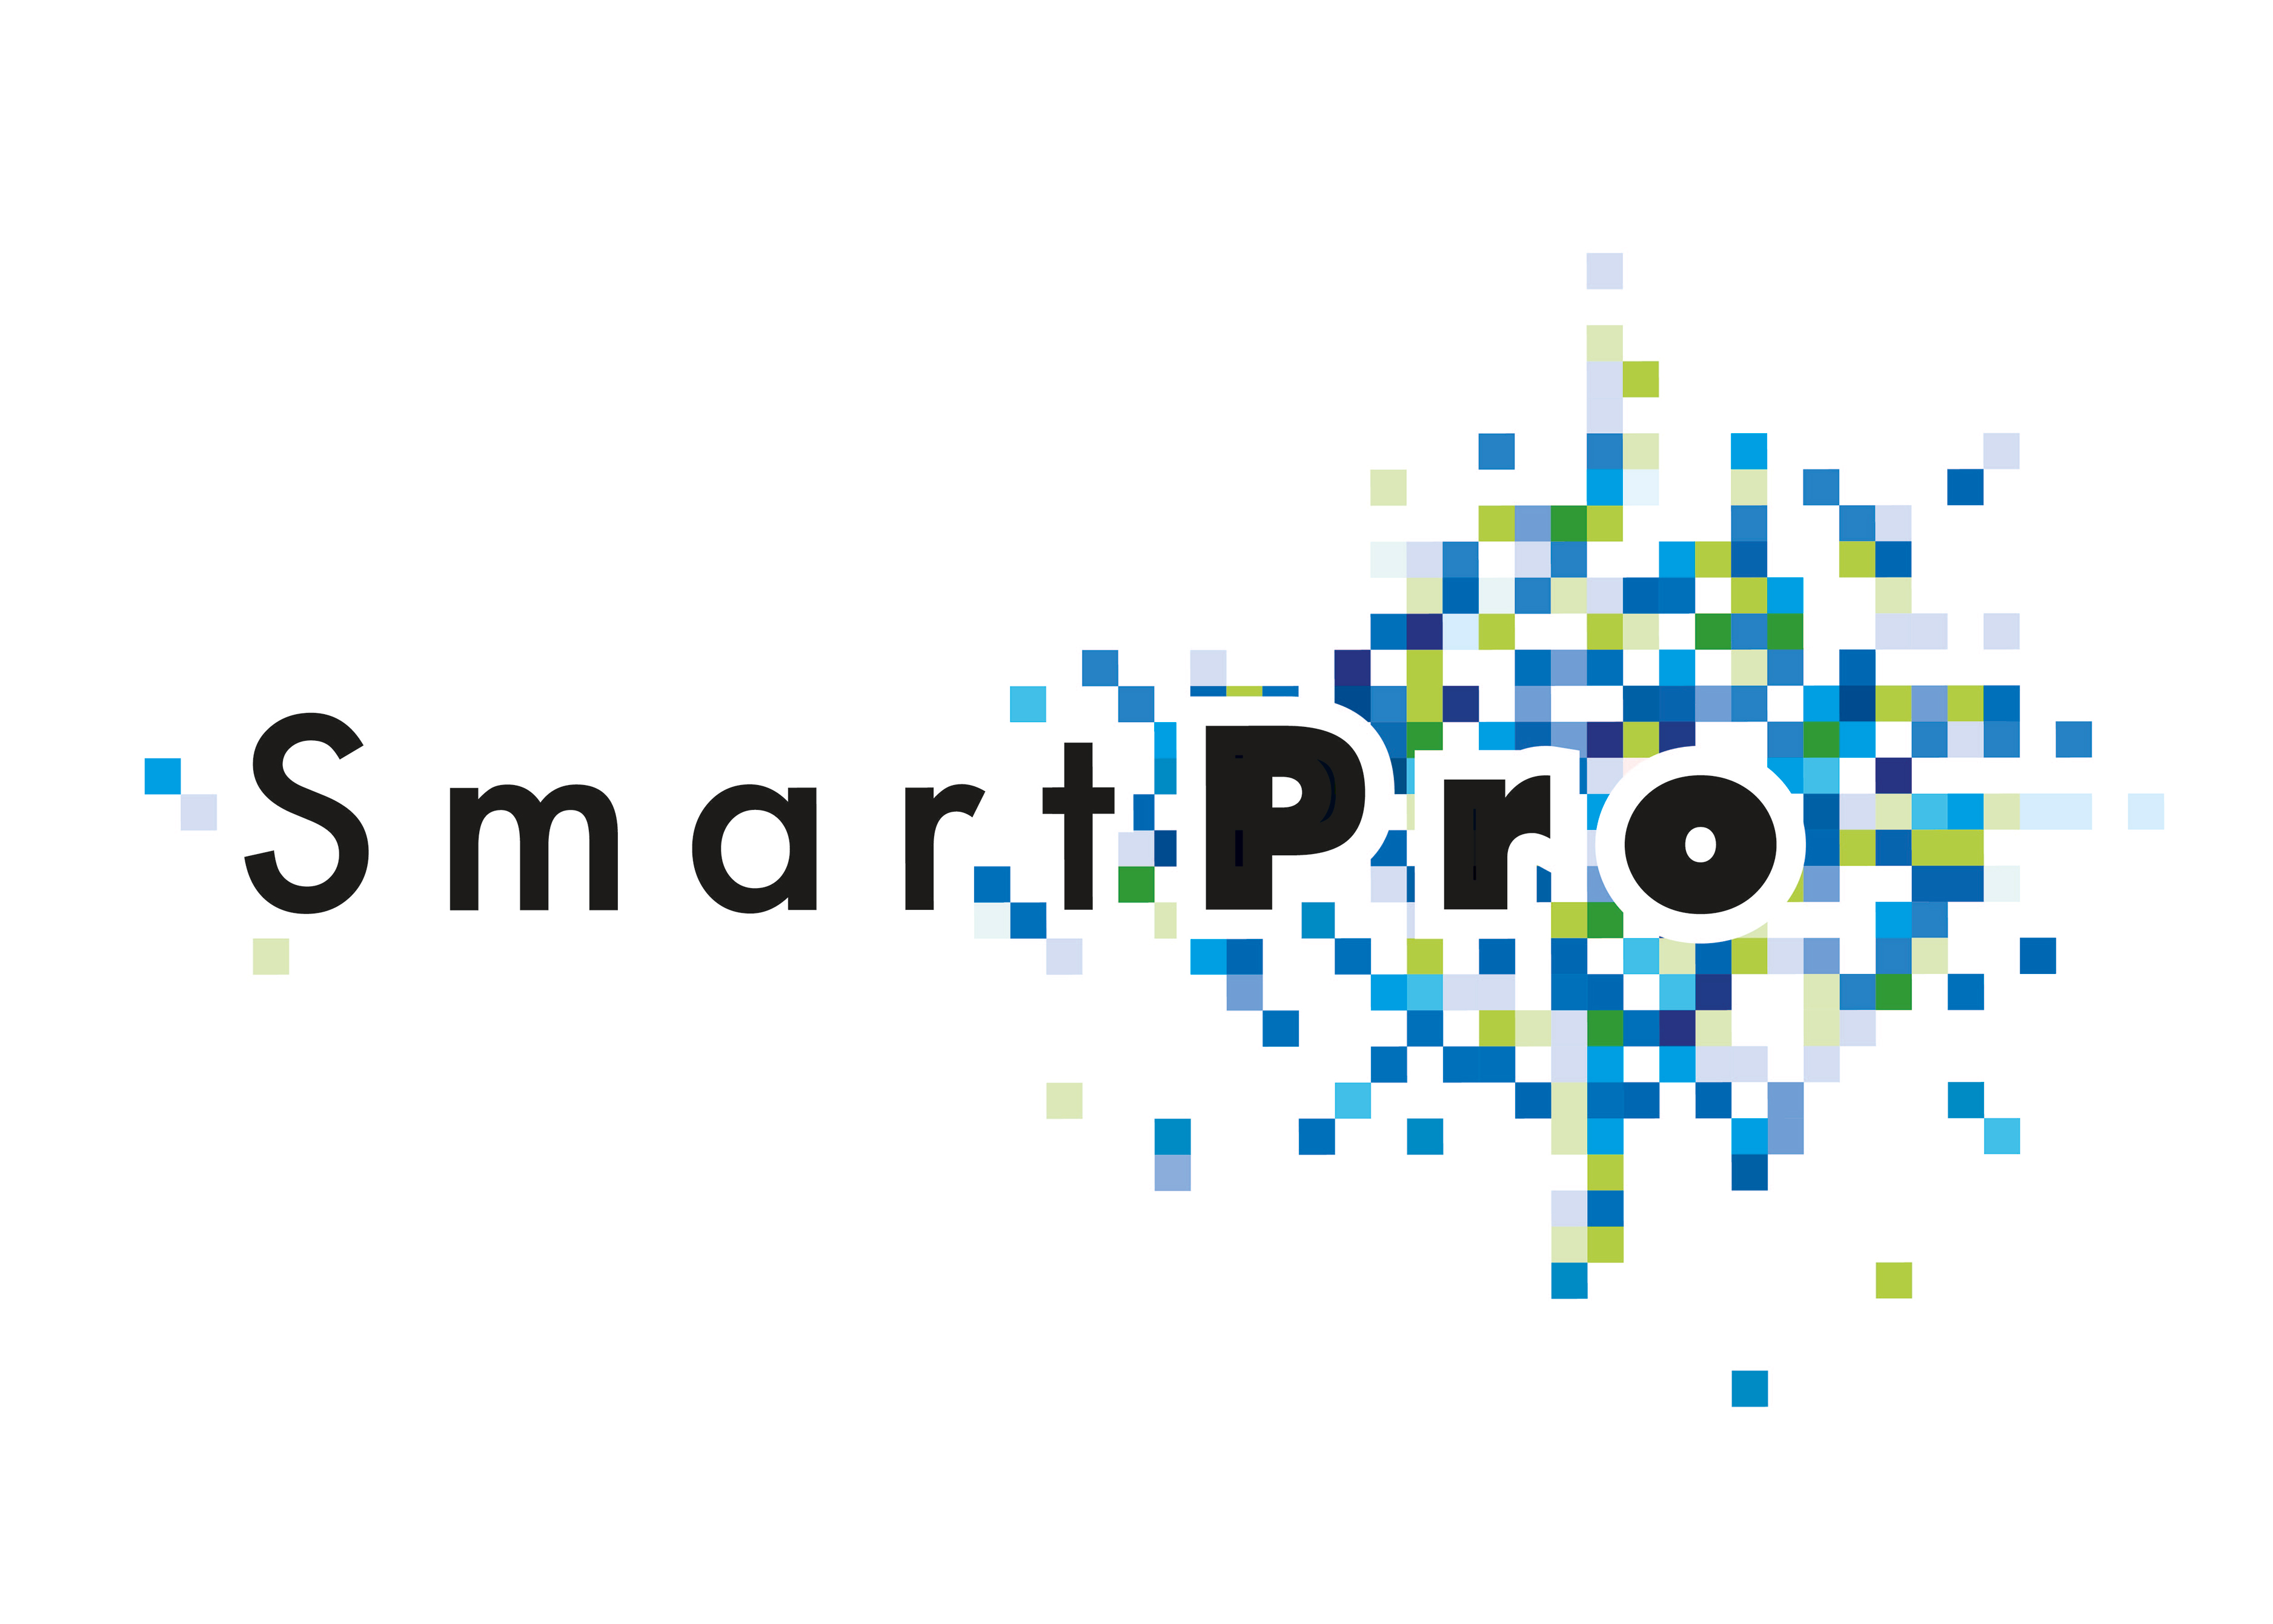 Picture of the SmartPro logo